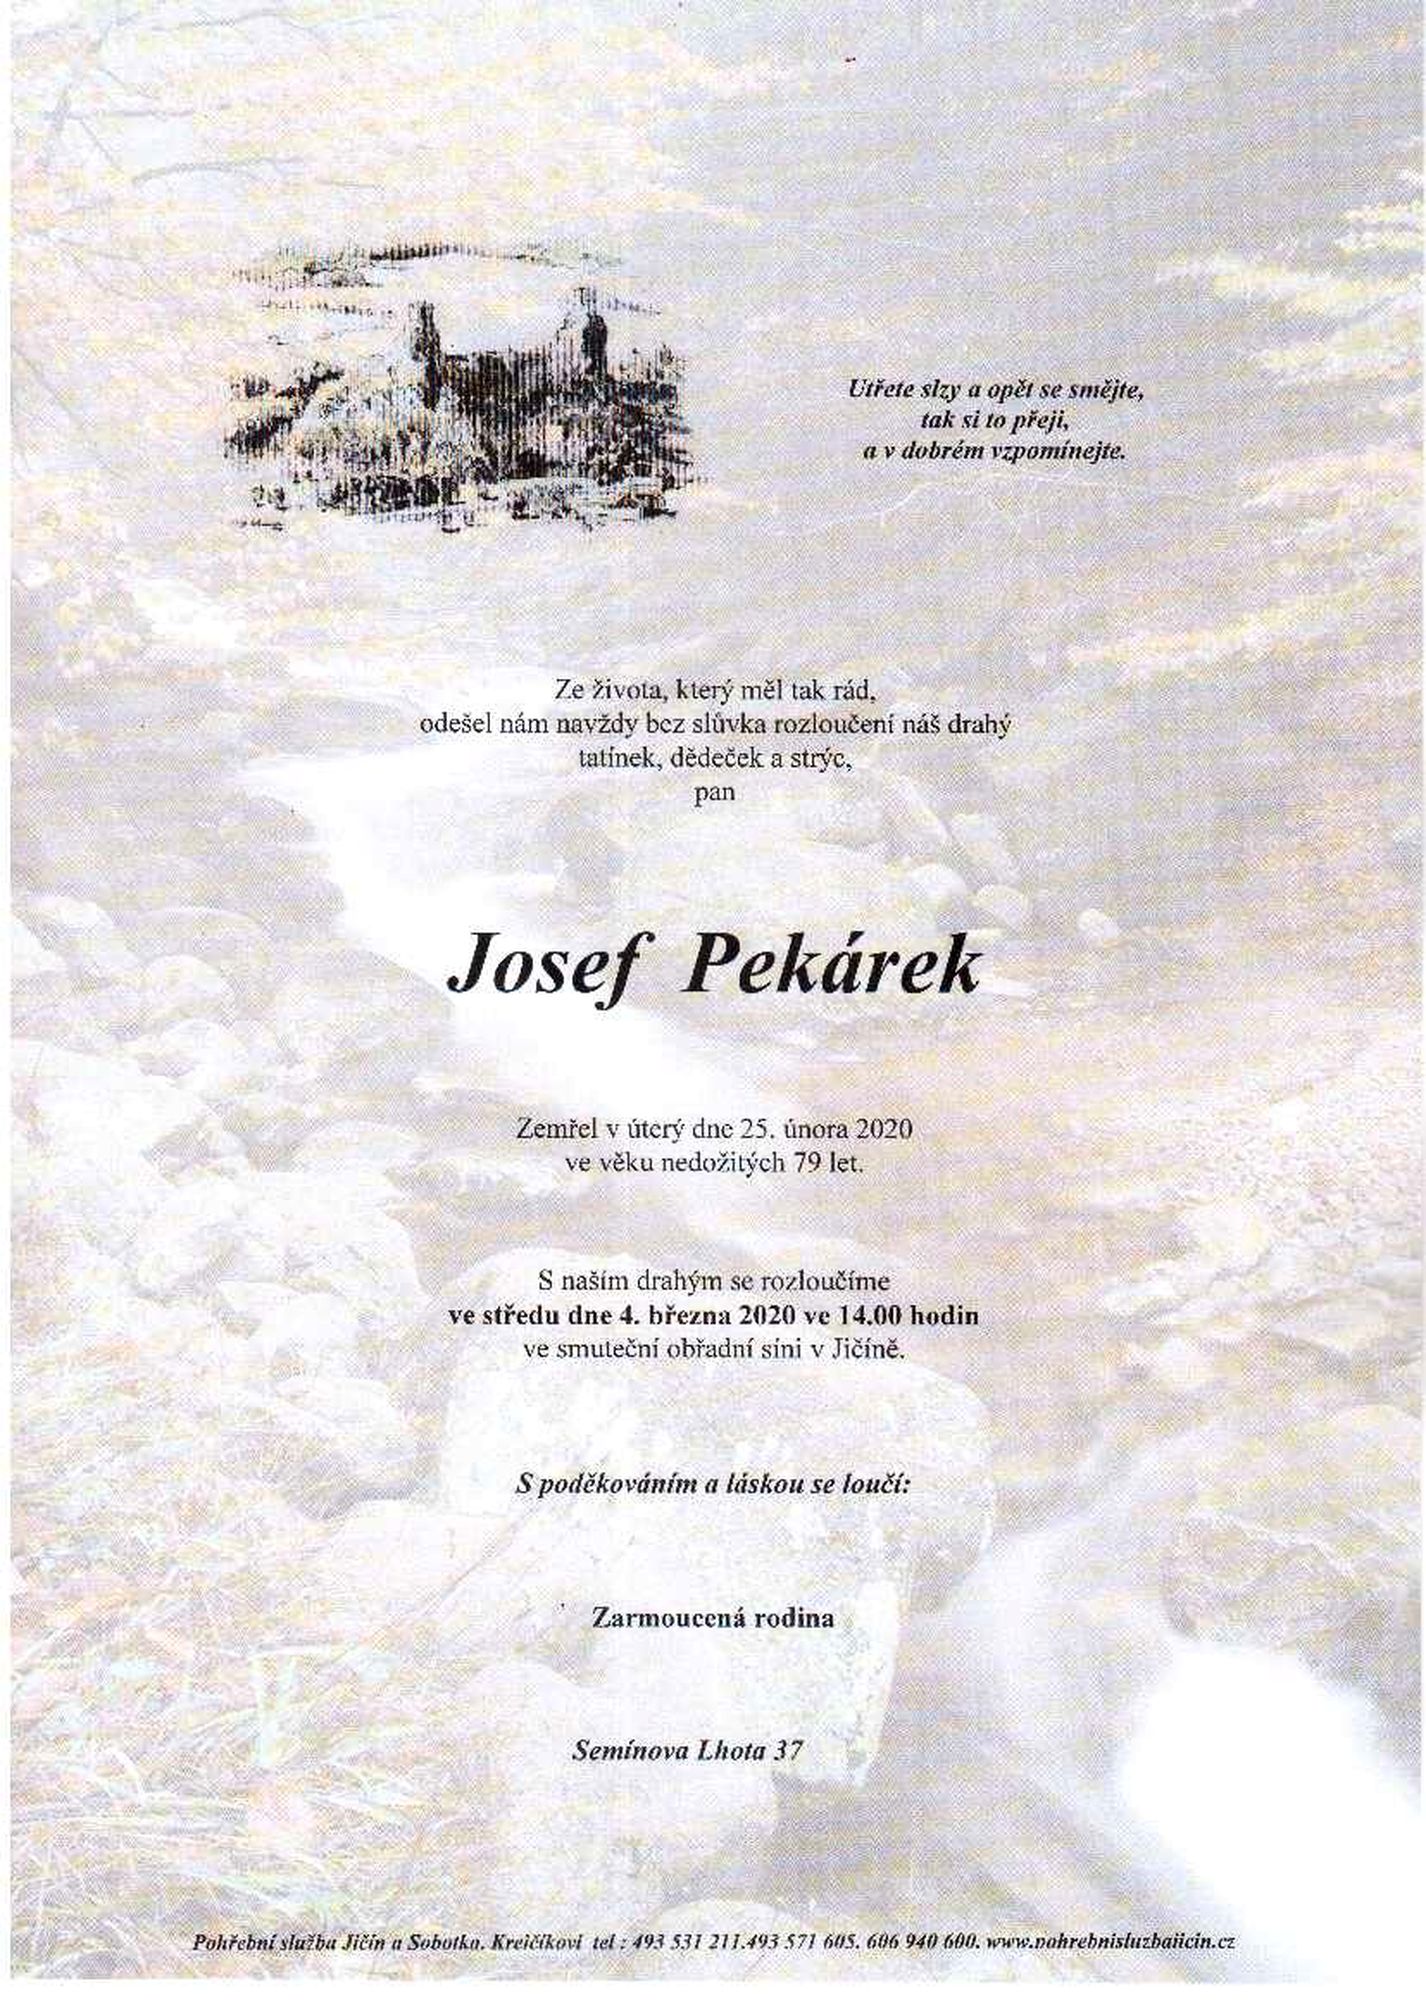 Josef Pekárek